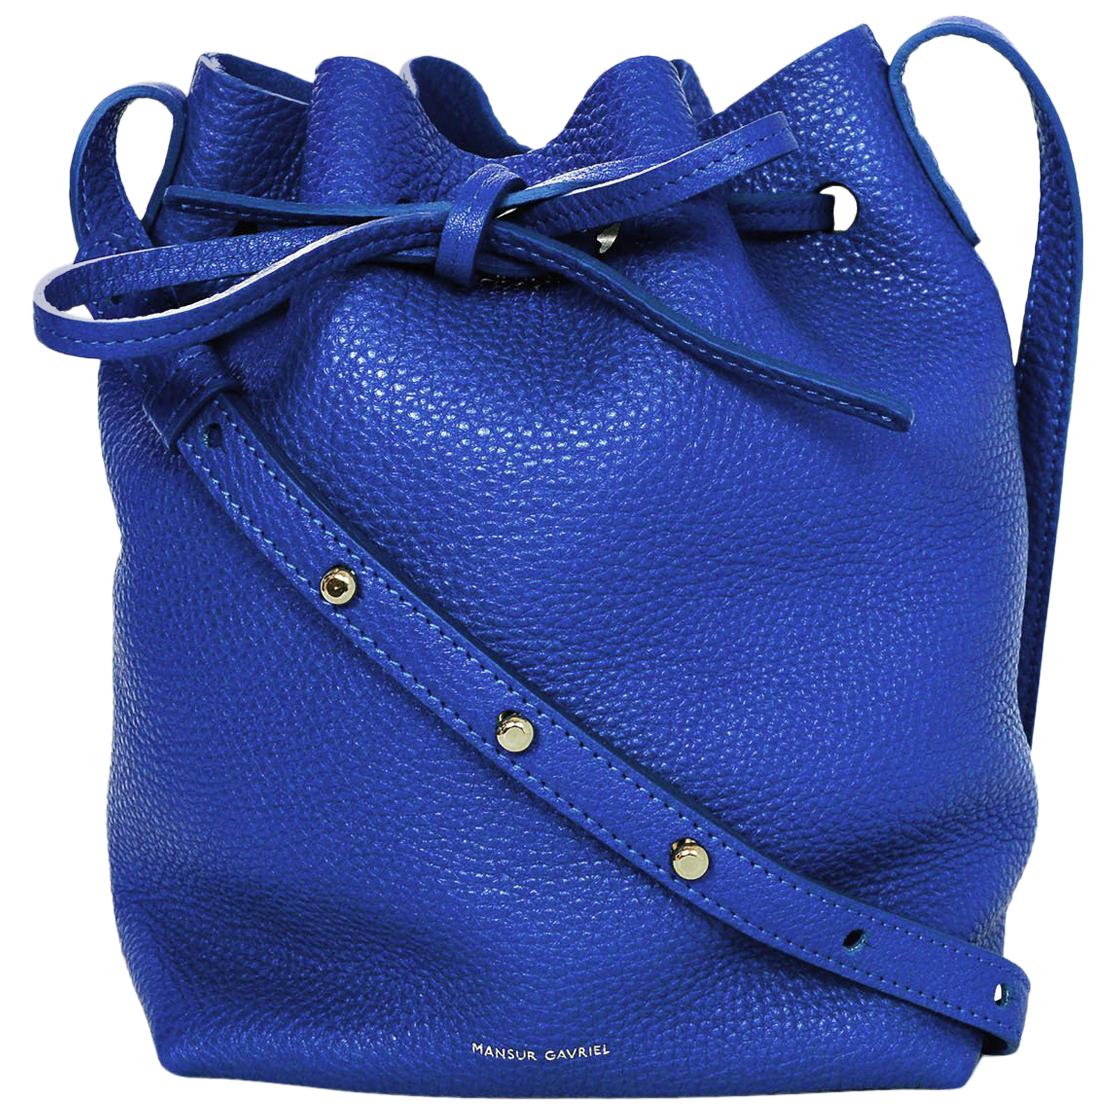  Mansur Gavriel Blue Tumble Leather Mini Bucket Bag